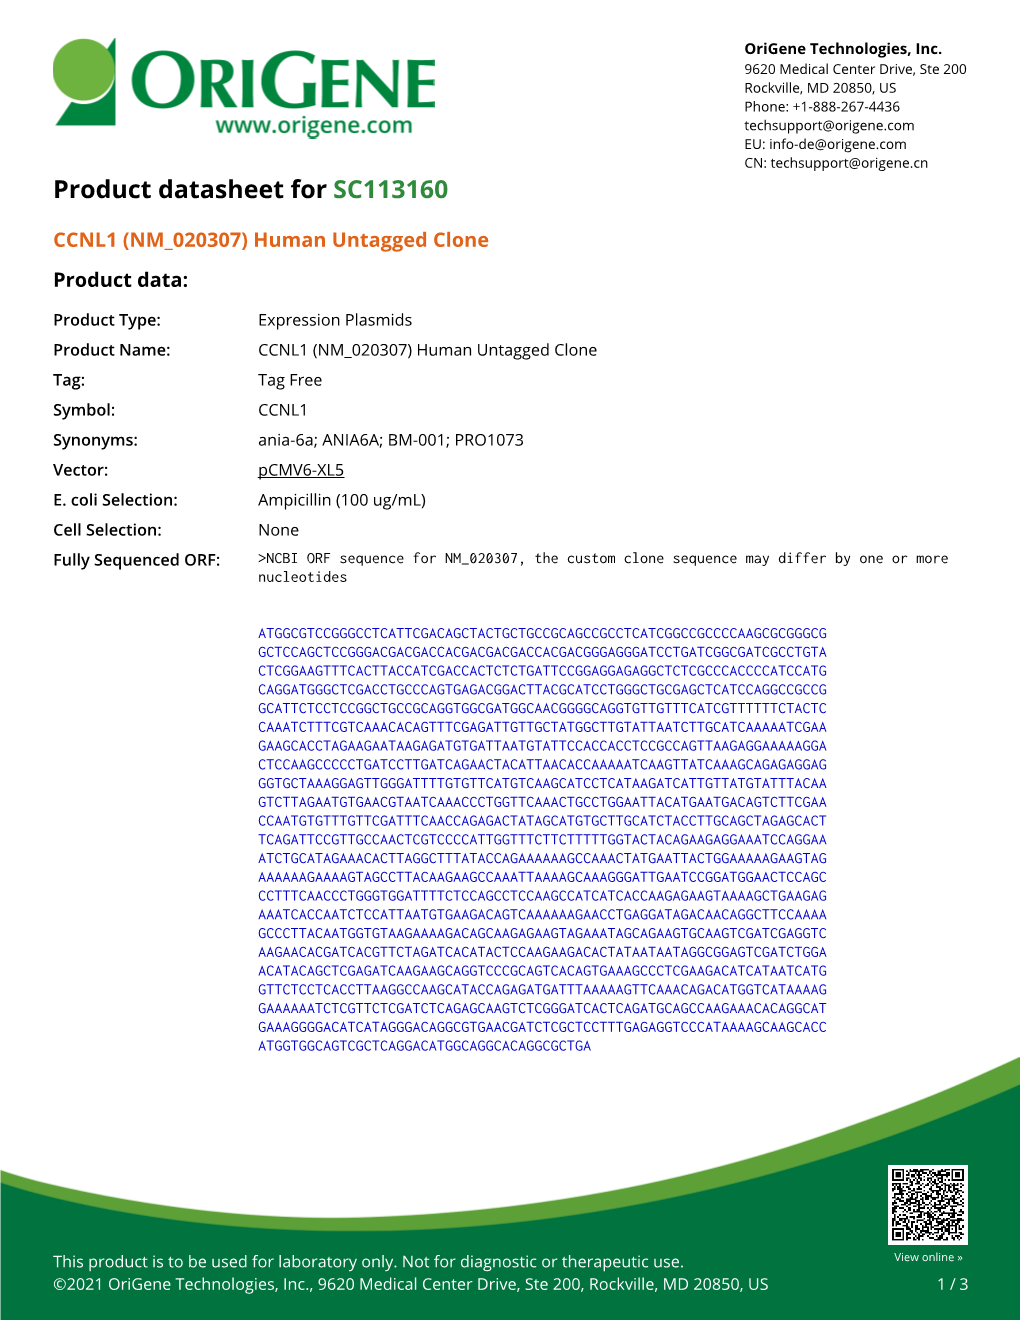 CCNL1 (NM 020307) Human Untagged Clone – SC113160 | Origene